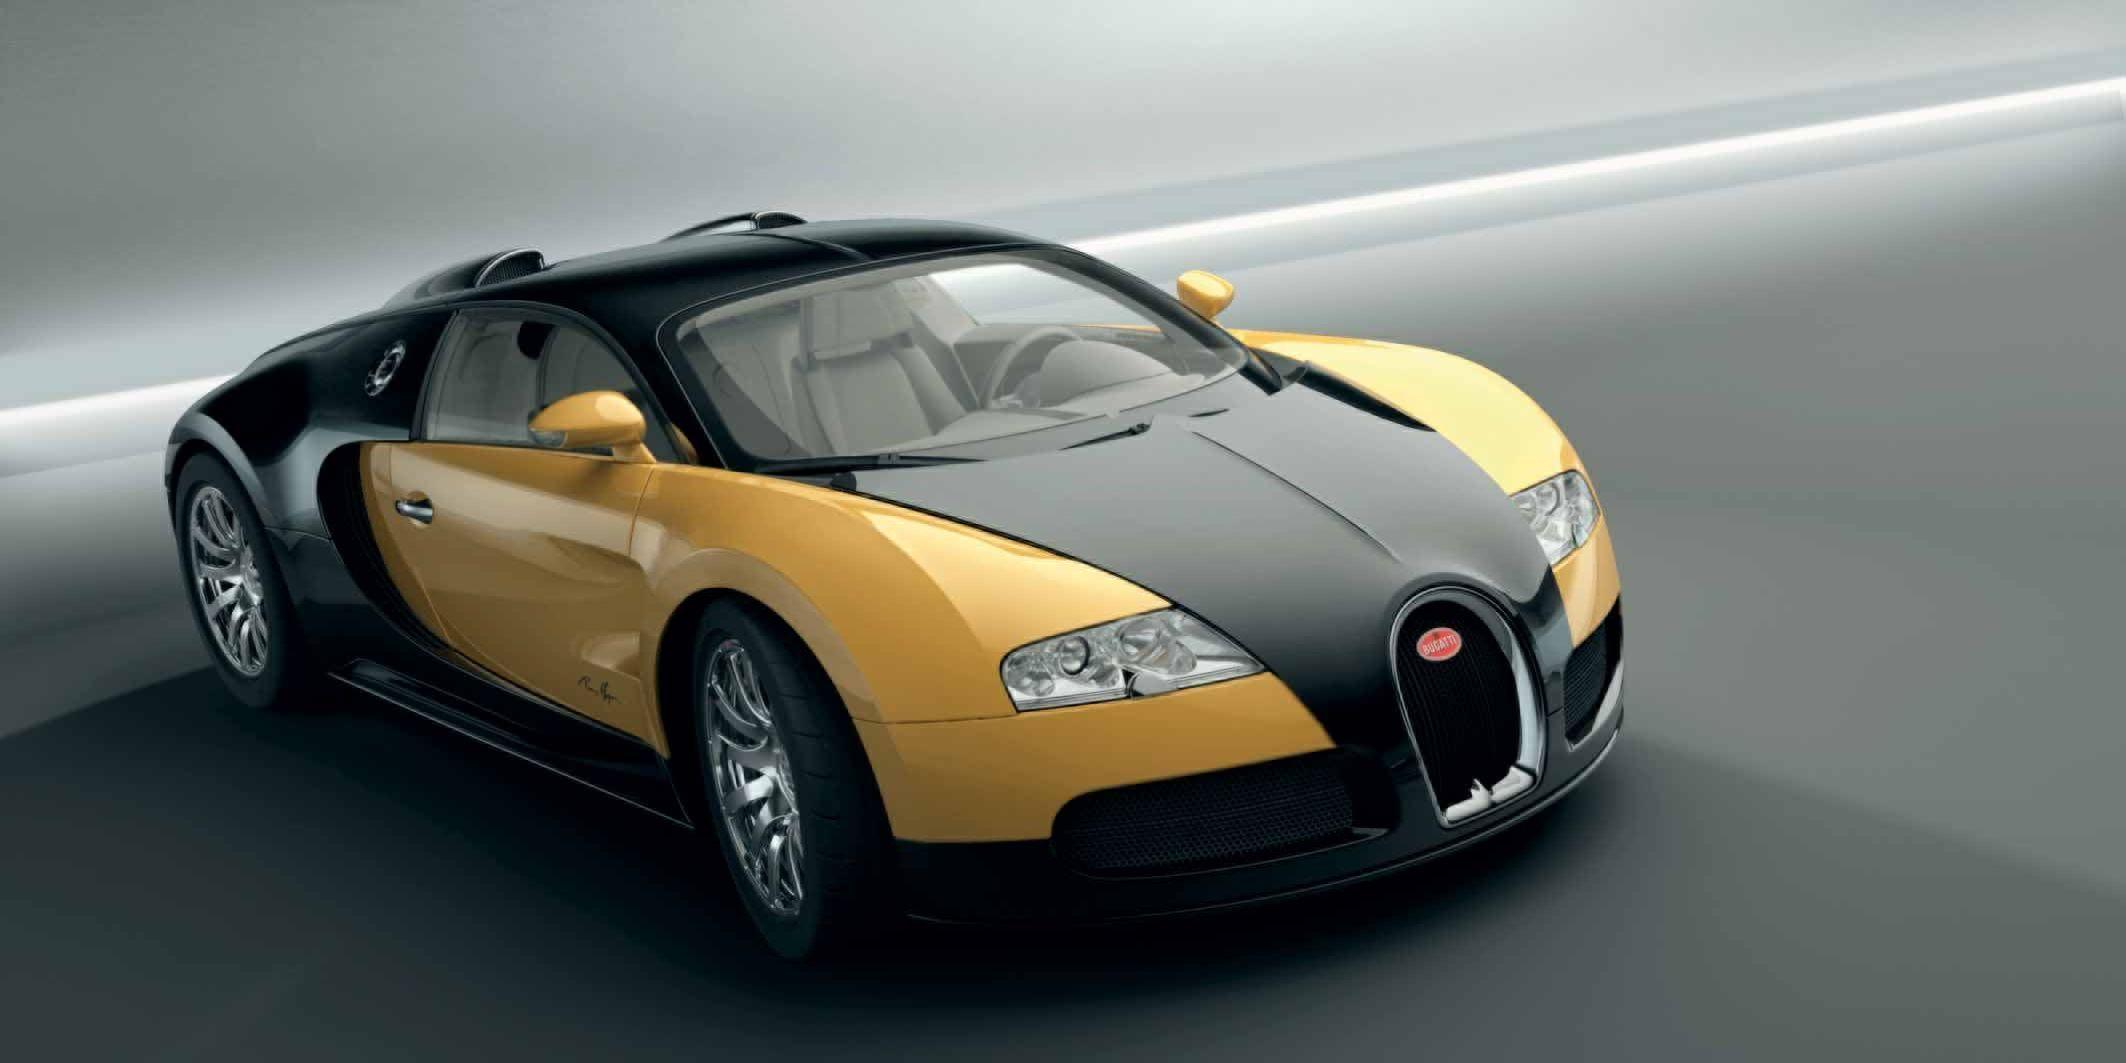 Black Bugatti Veyron Wallpaper HD. Download High Quality